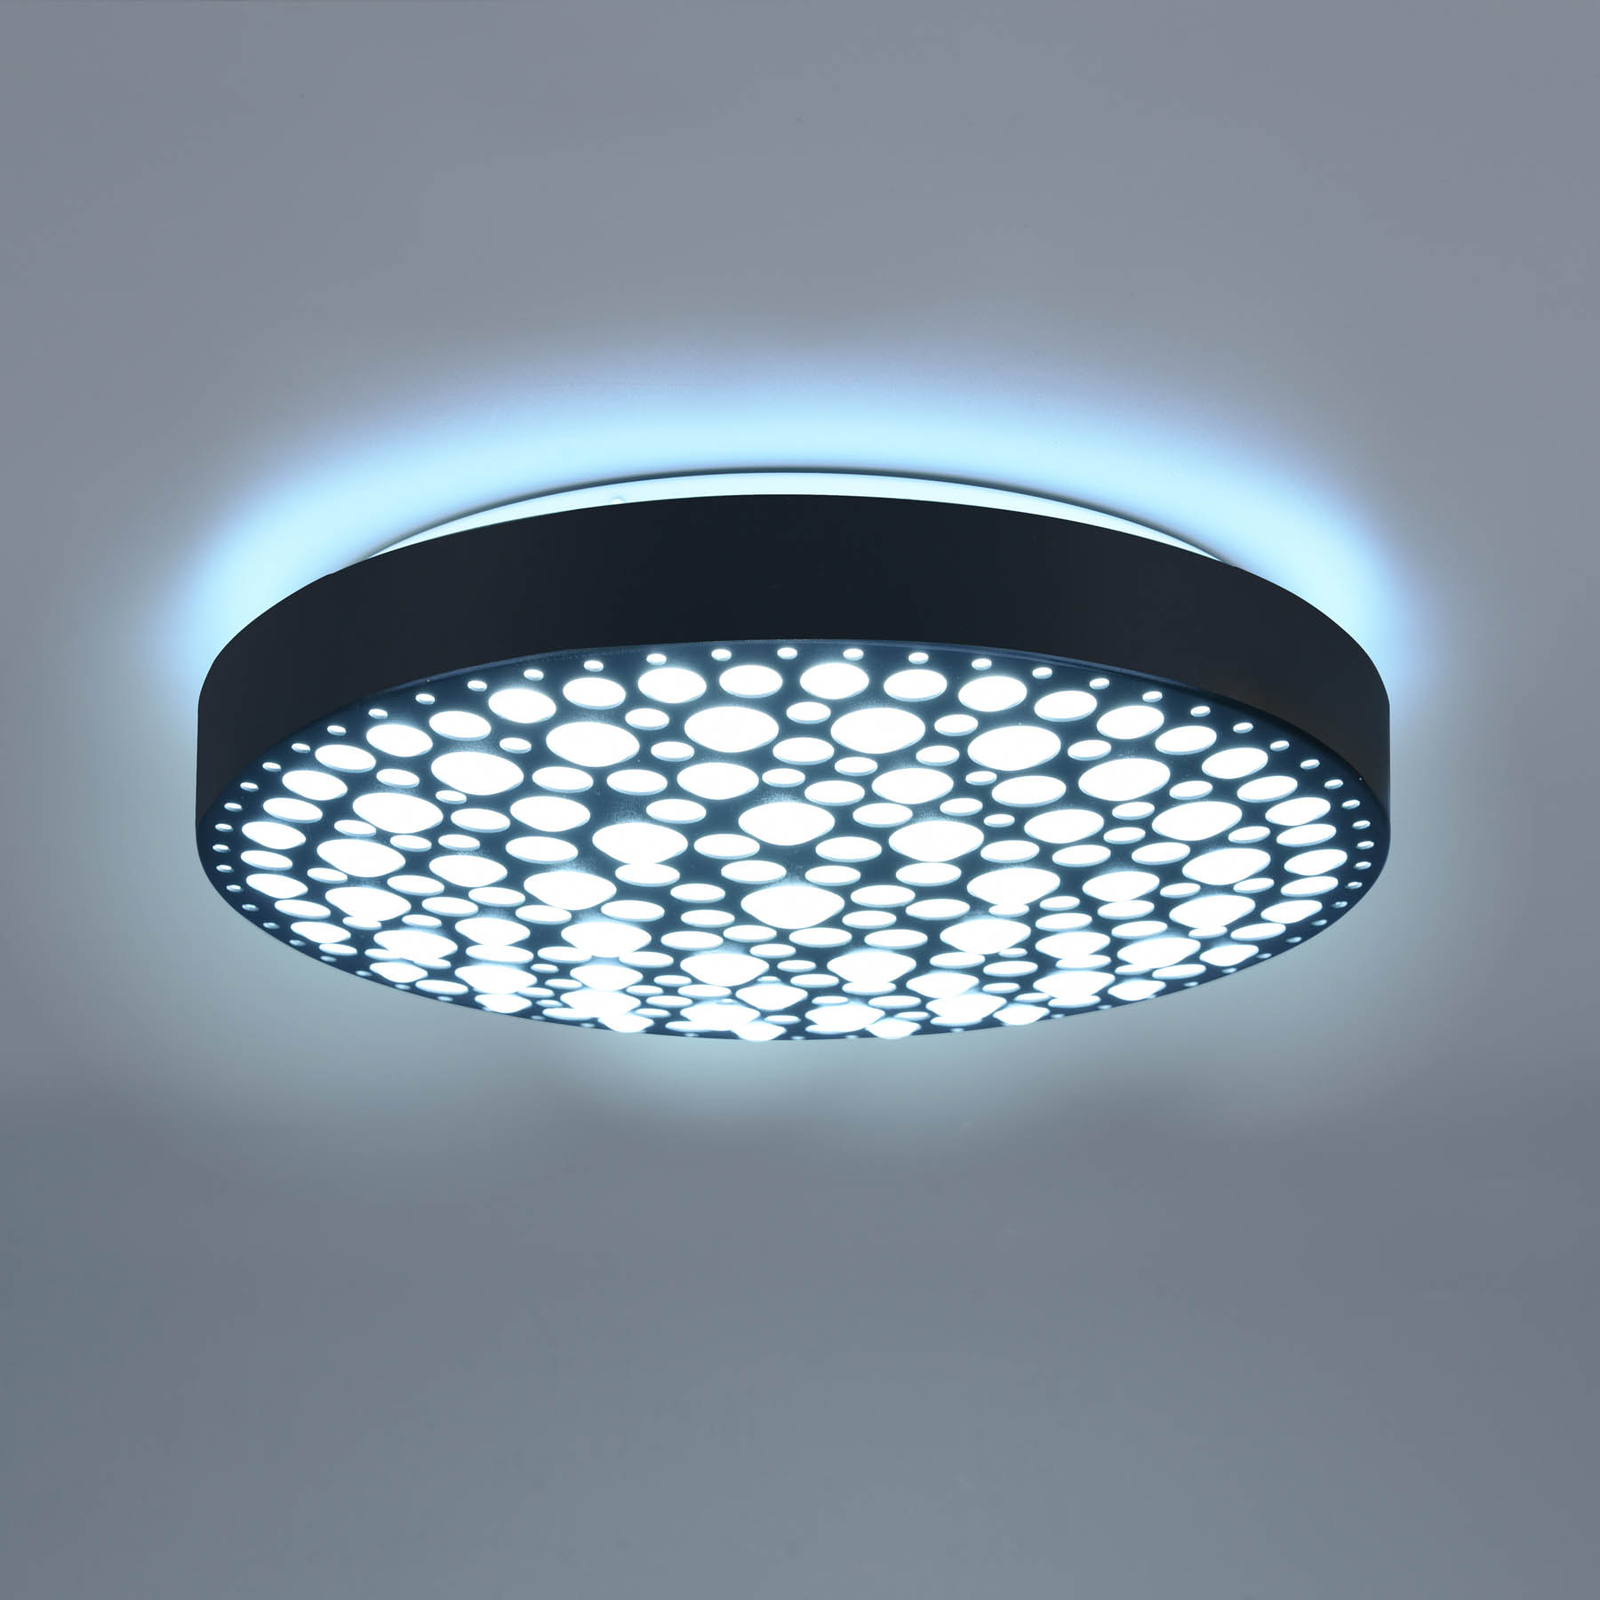 LED-Deckenlampe Chizu Ø 40,5cm dimmbar RGB schwarz